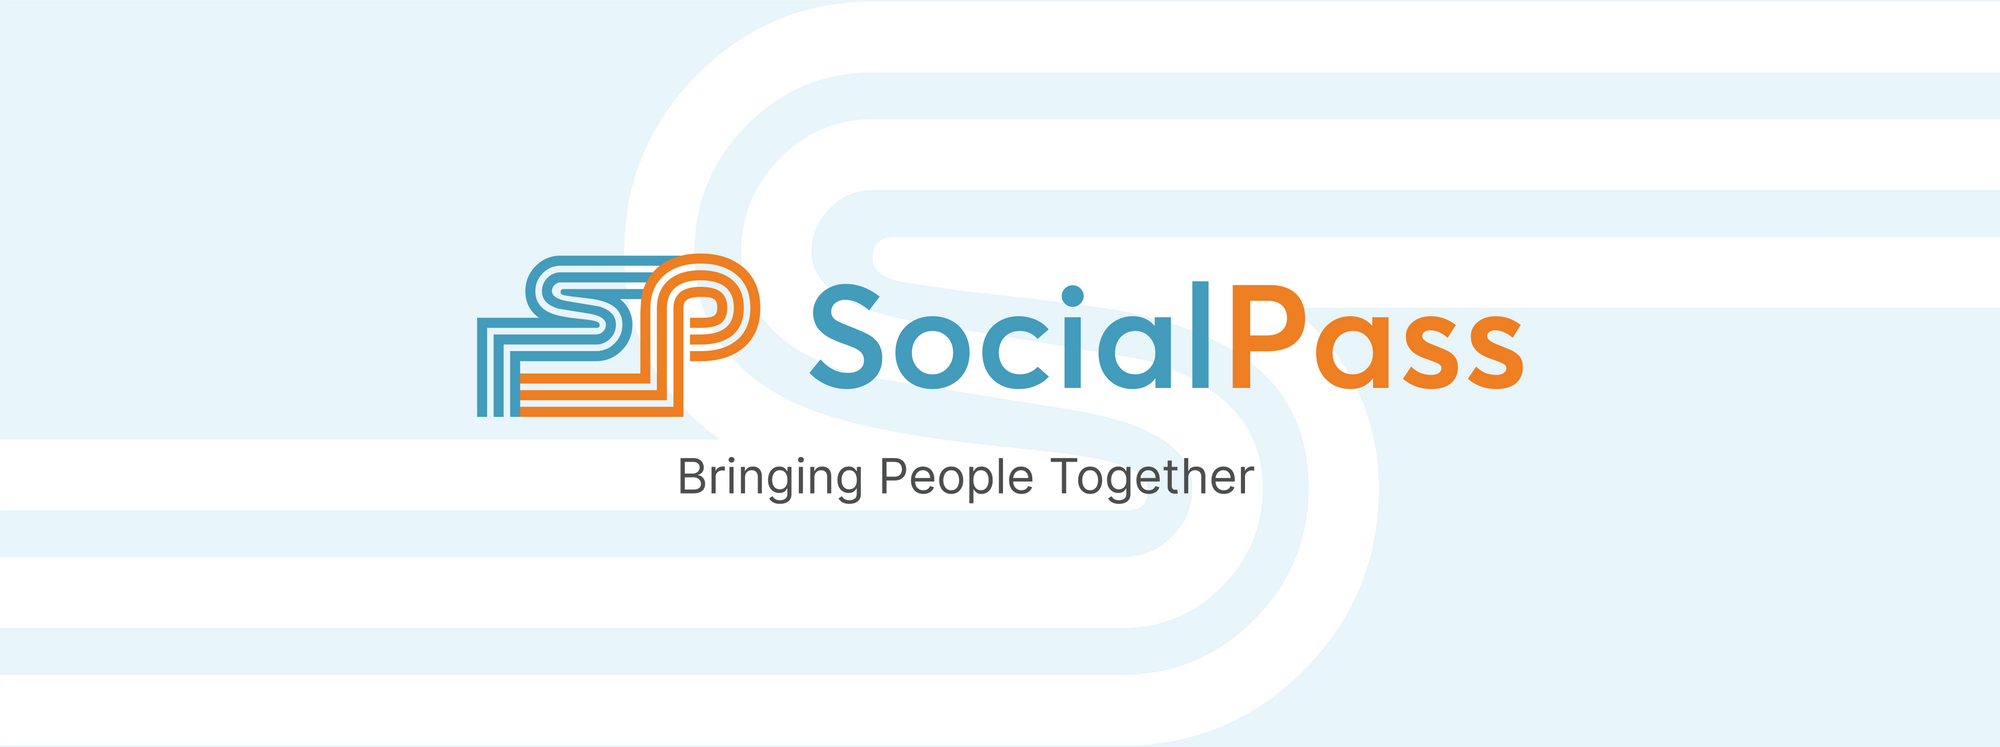 SocialPass Weekly Update: Anticipating a New Feature